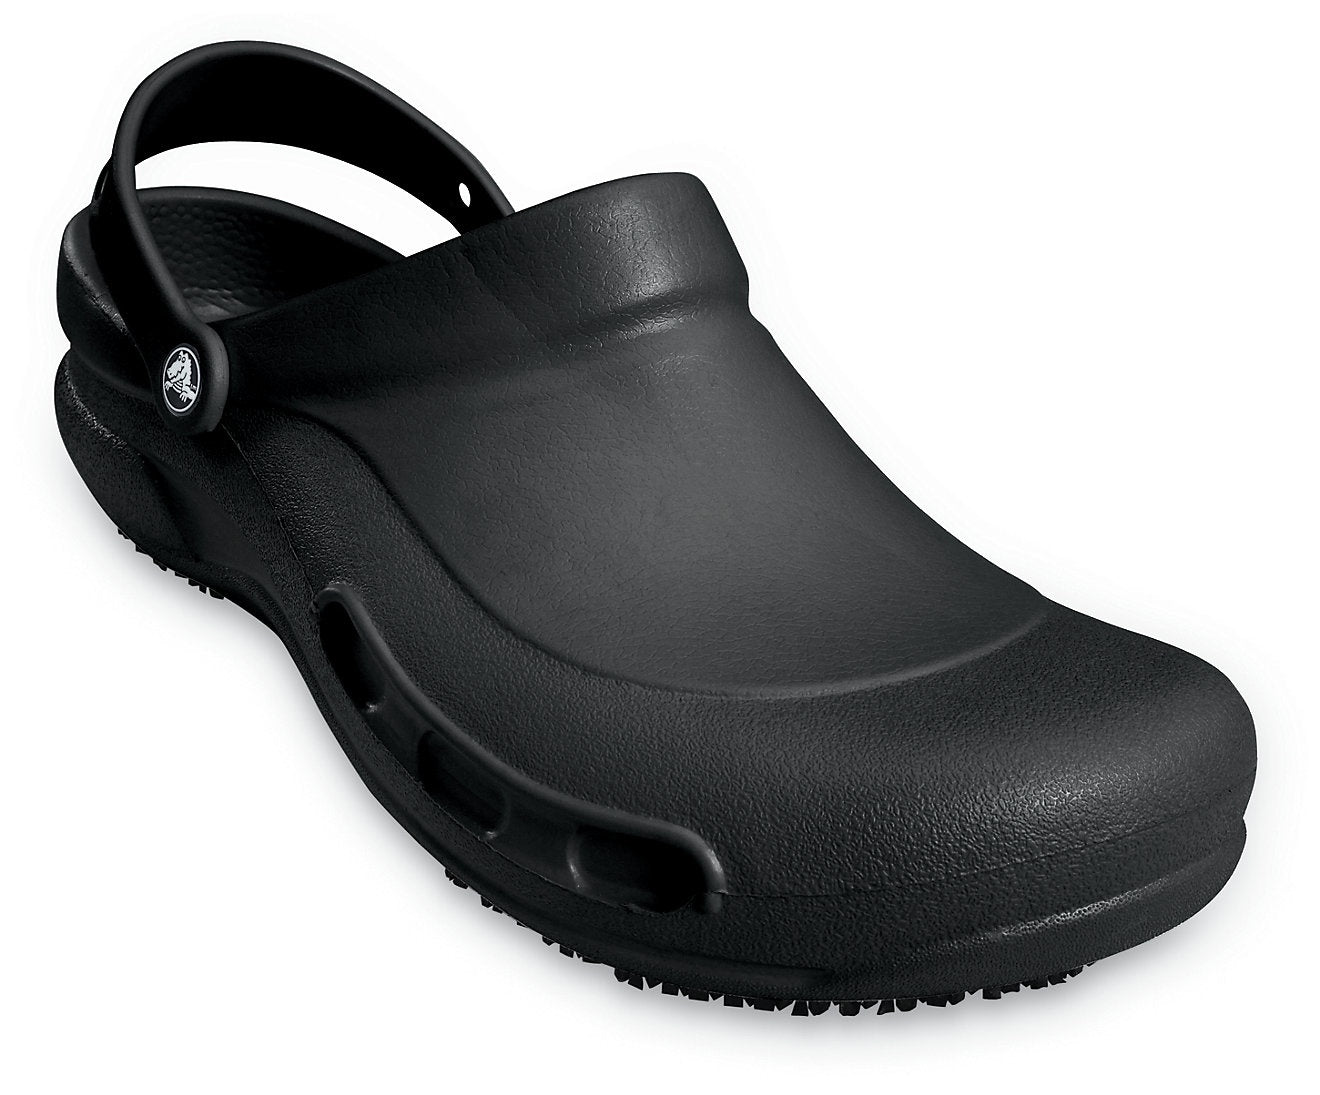 Crocs Bistro 10075 Unisex Black Clog Sandal